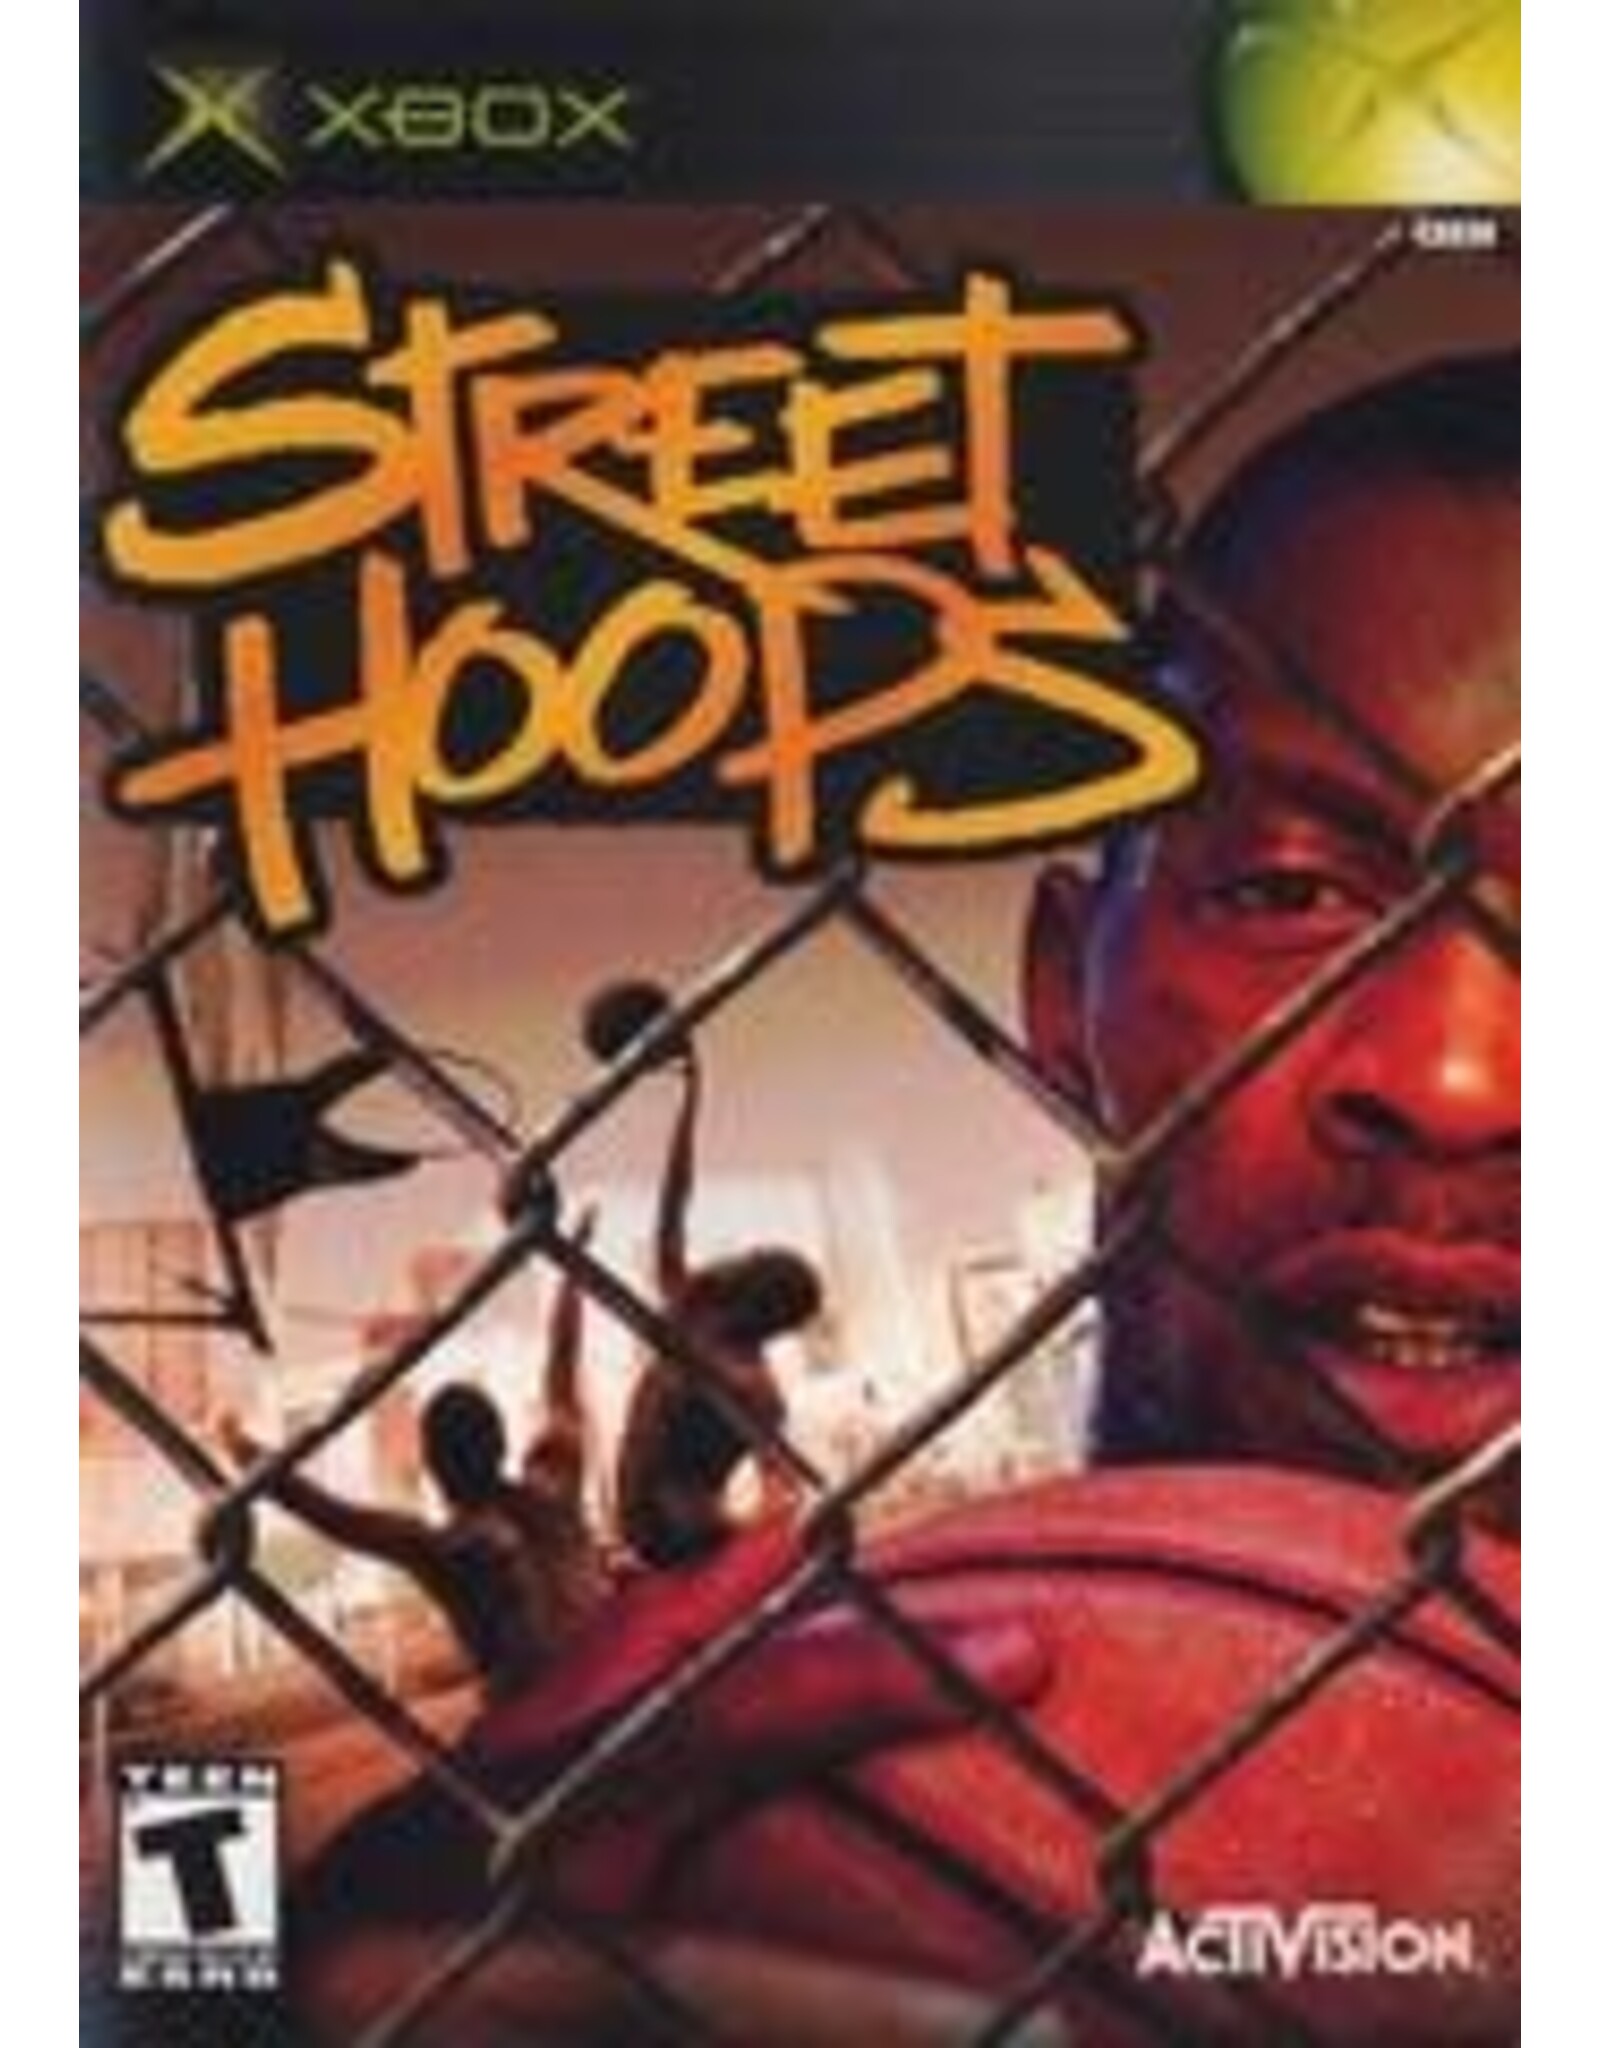 Xbox Street Hoops (Used)